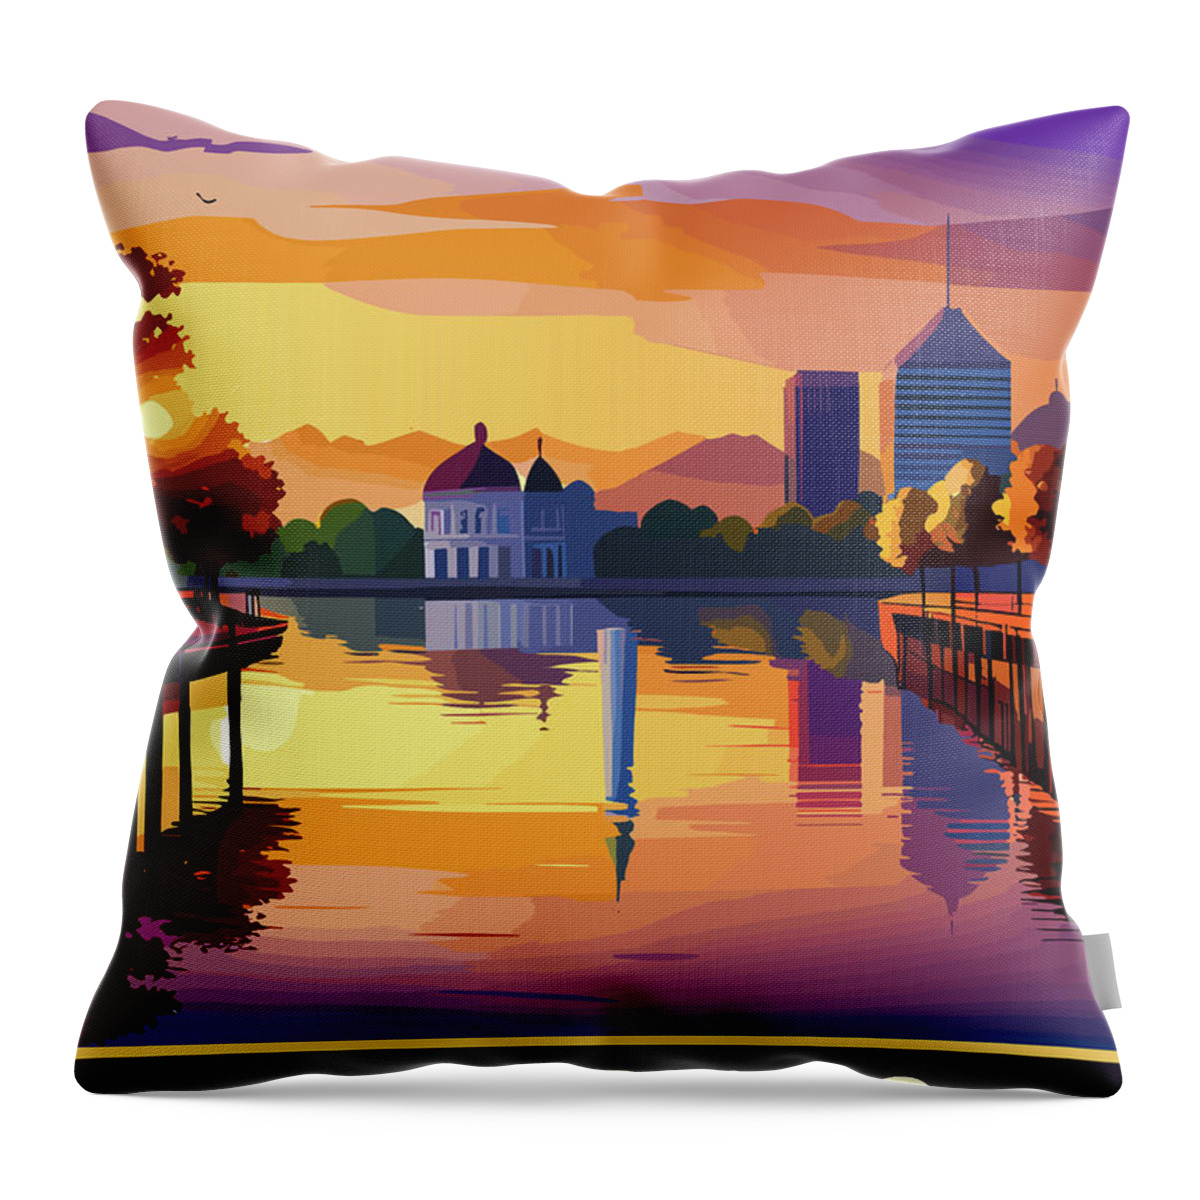 Harrisburg Throw Pillow featuring the digital art Harrisburg, Pennsylvania by Long Shot